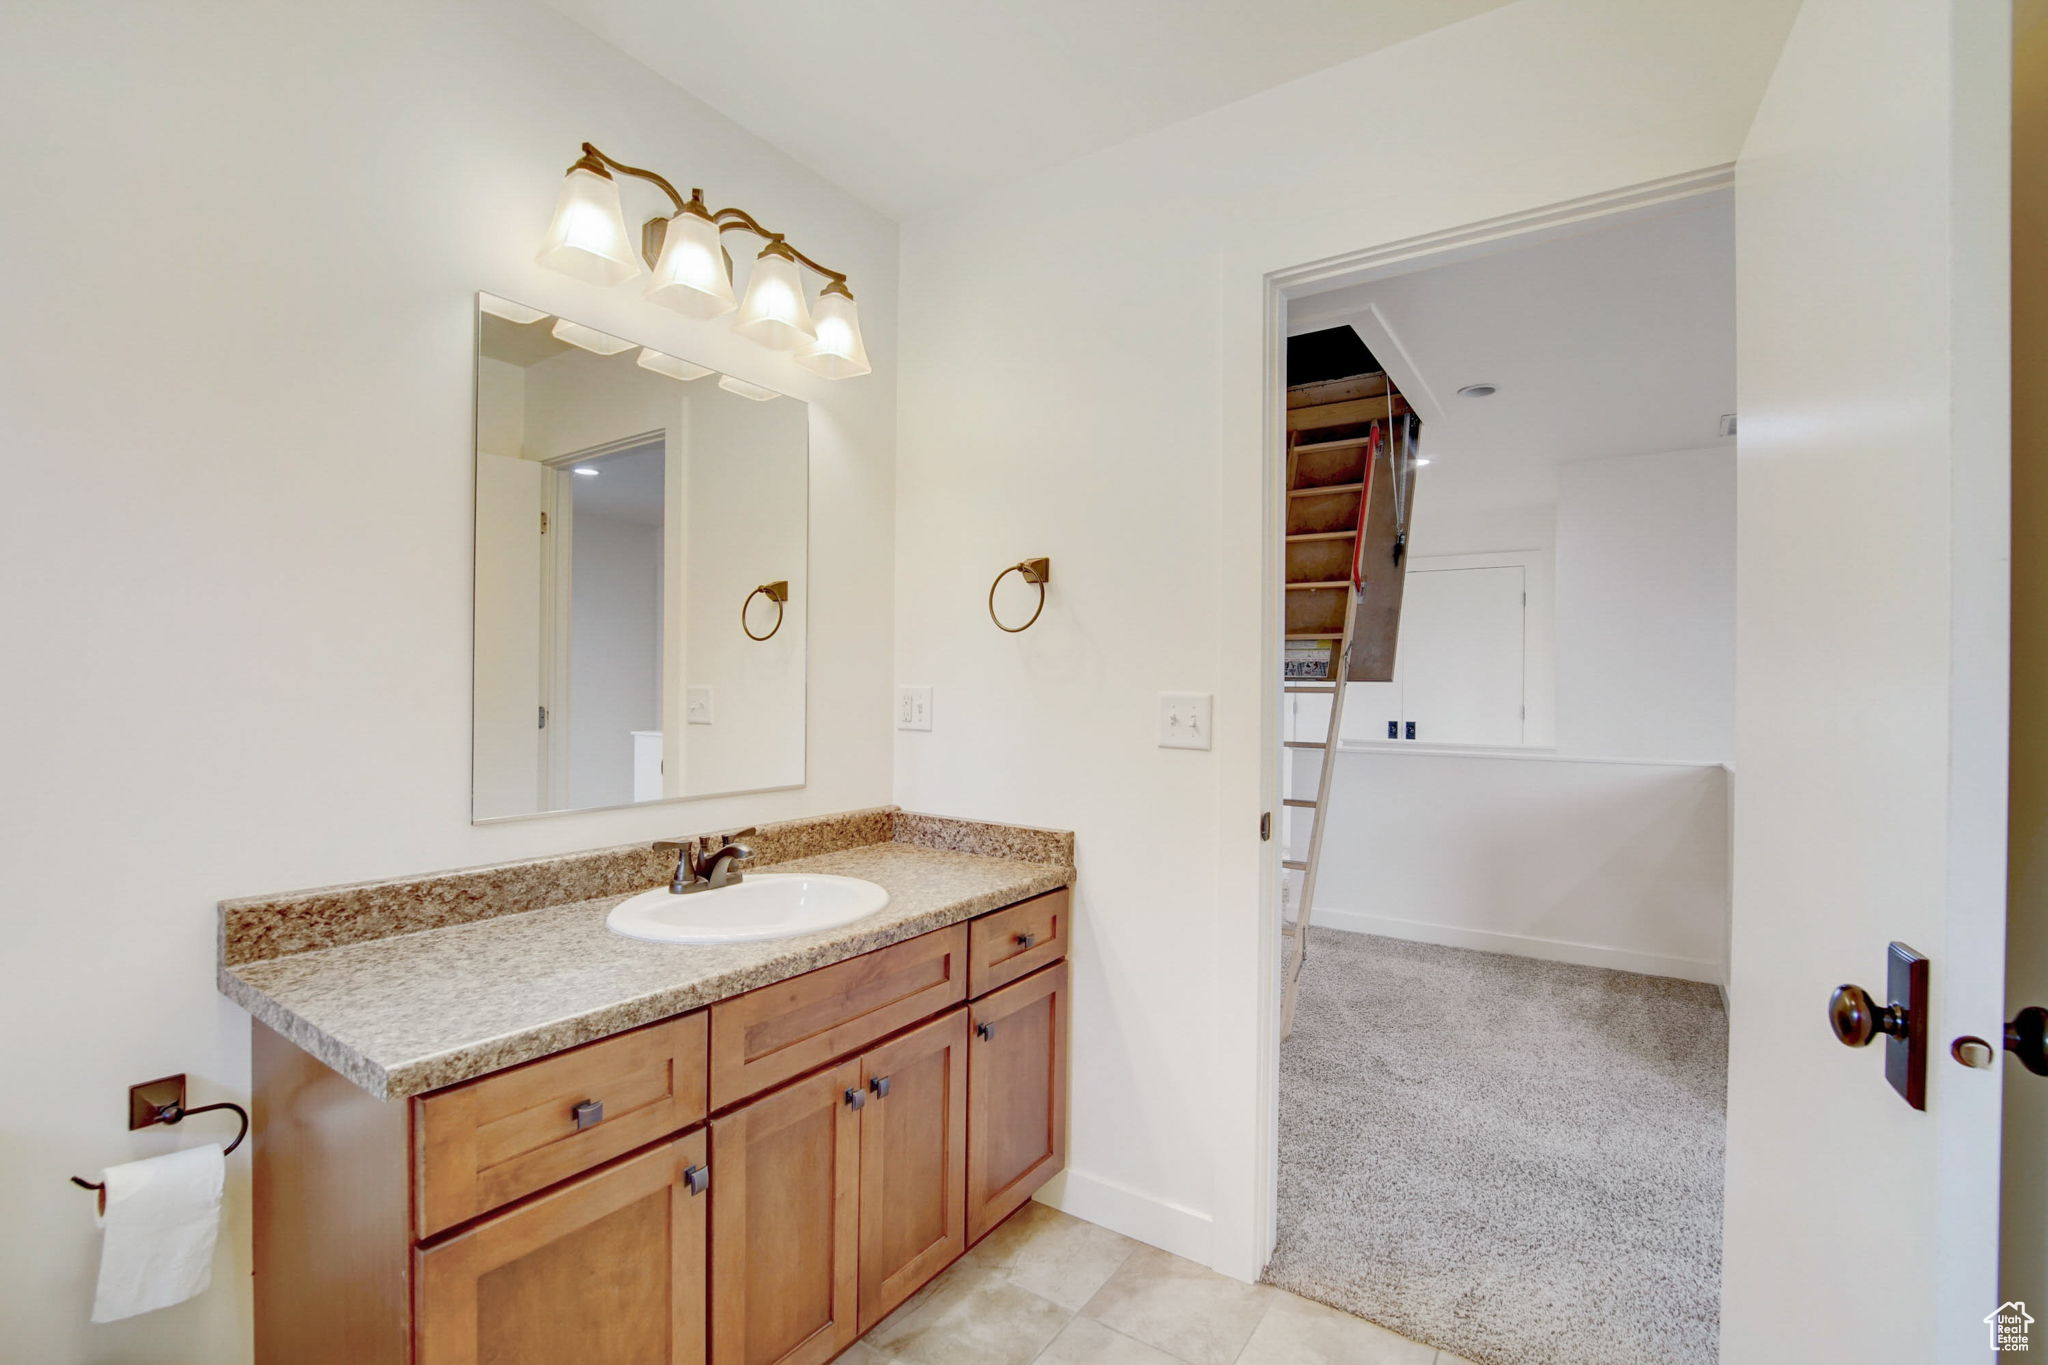 Bathroom featuring oversized vanity and tile flooring